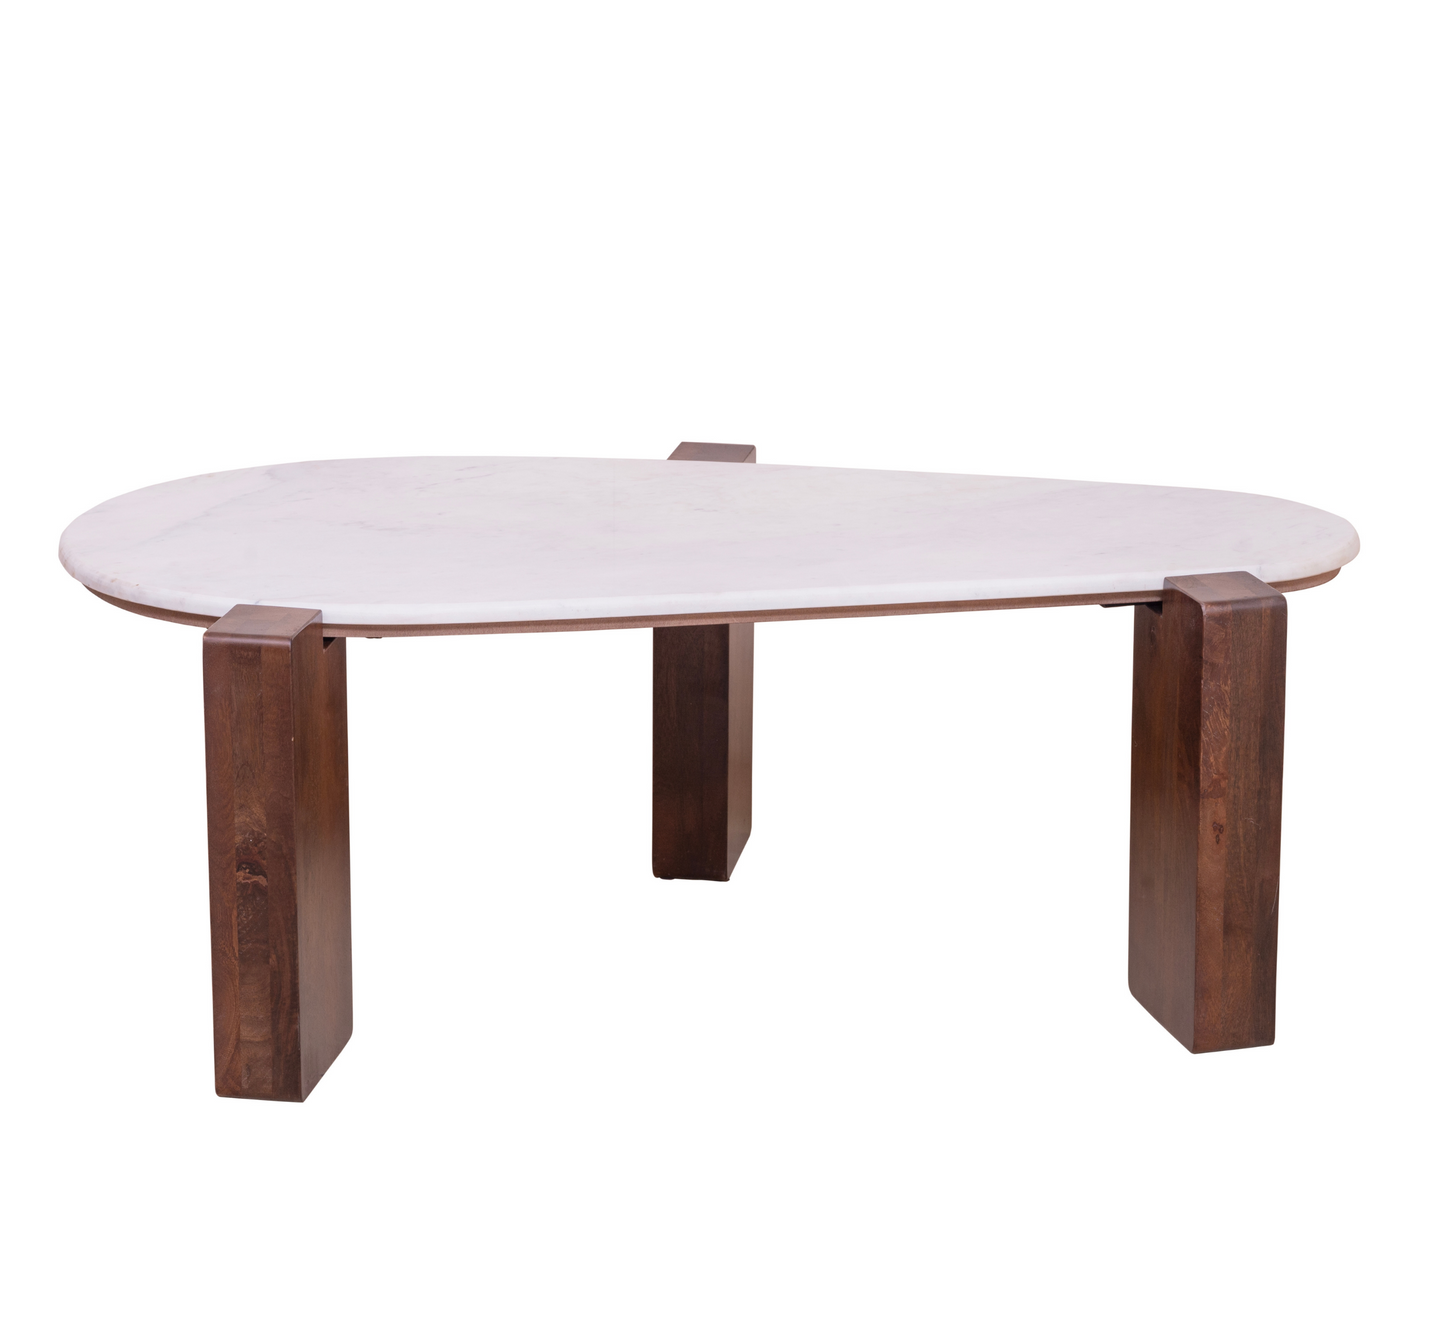 Nami Abstract Centre Table